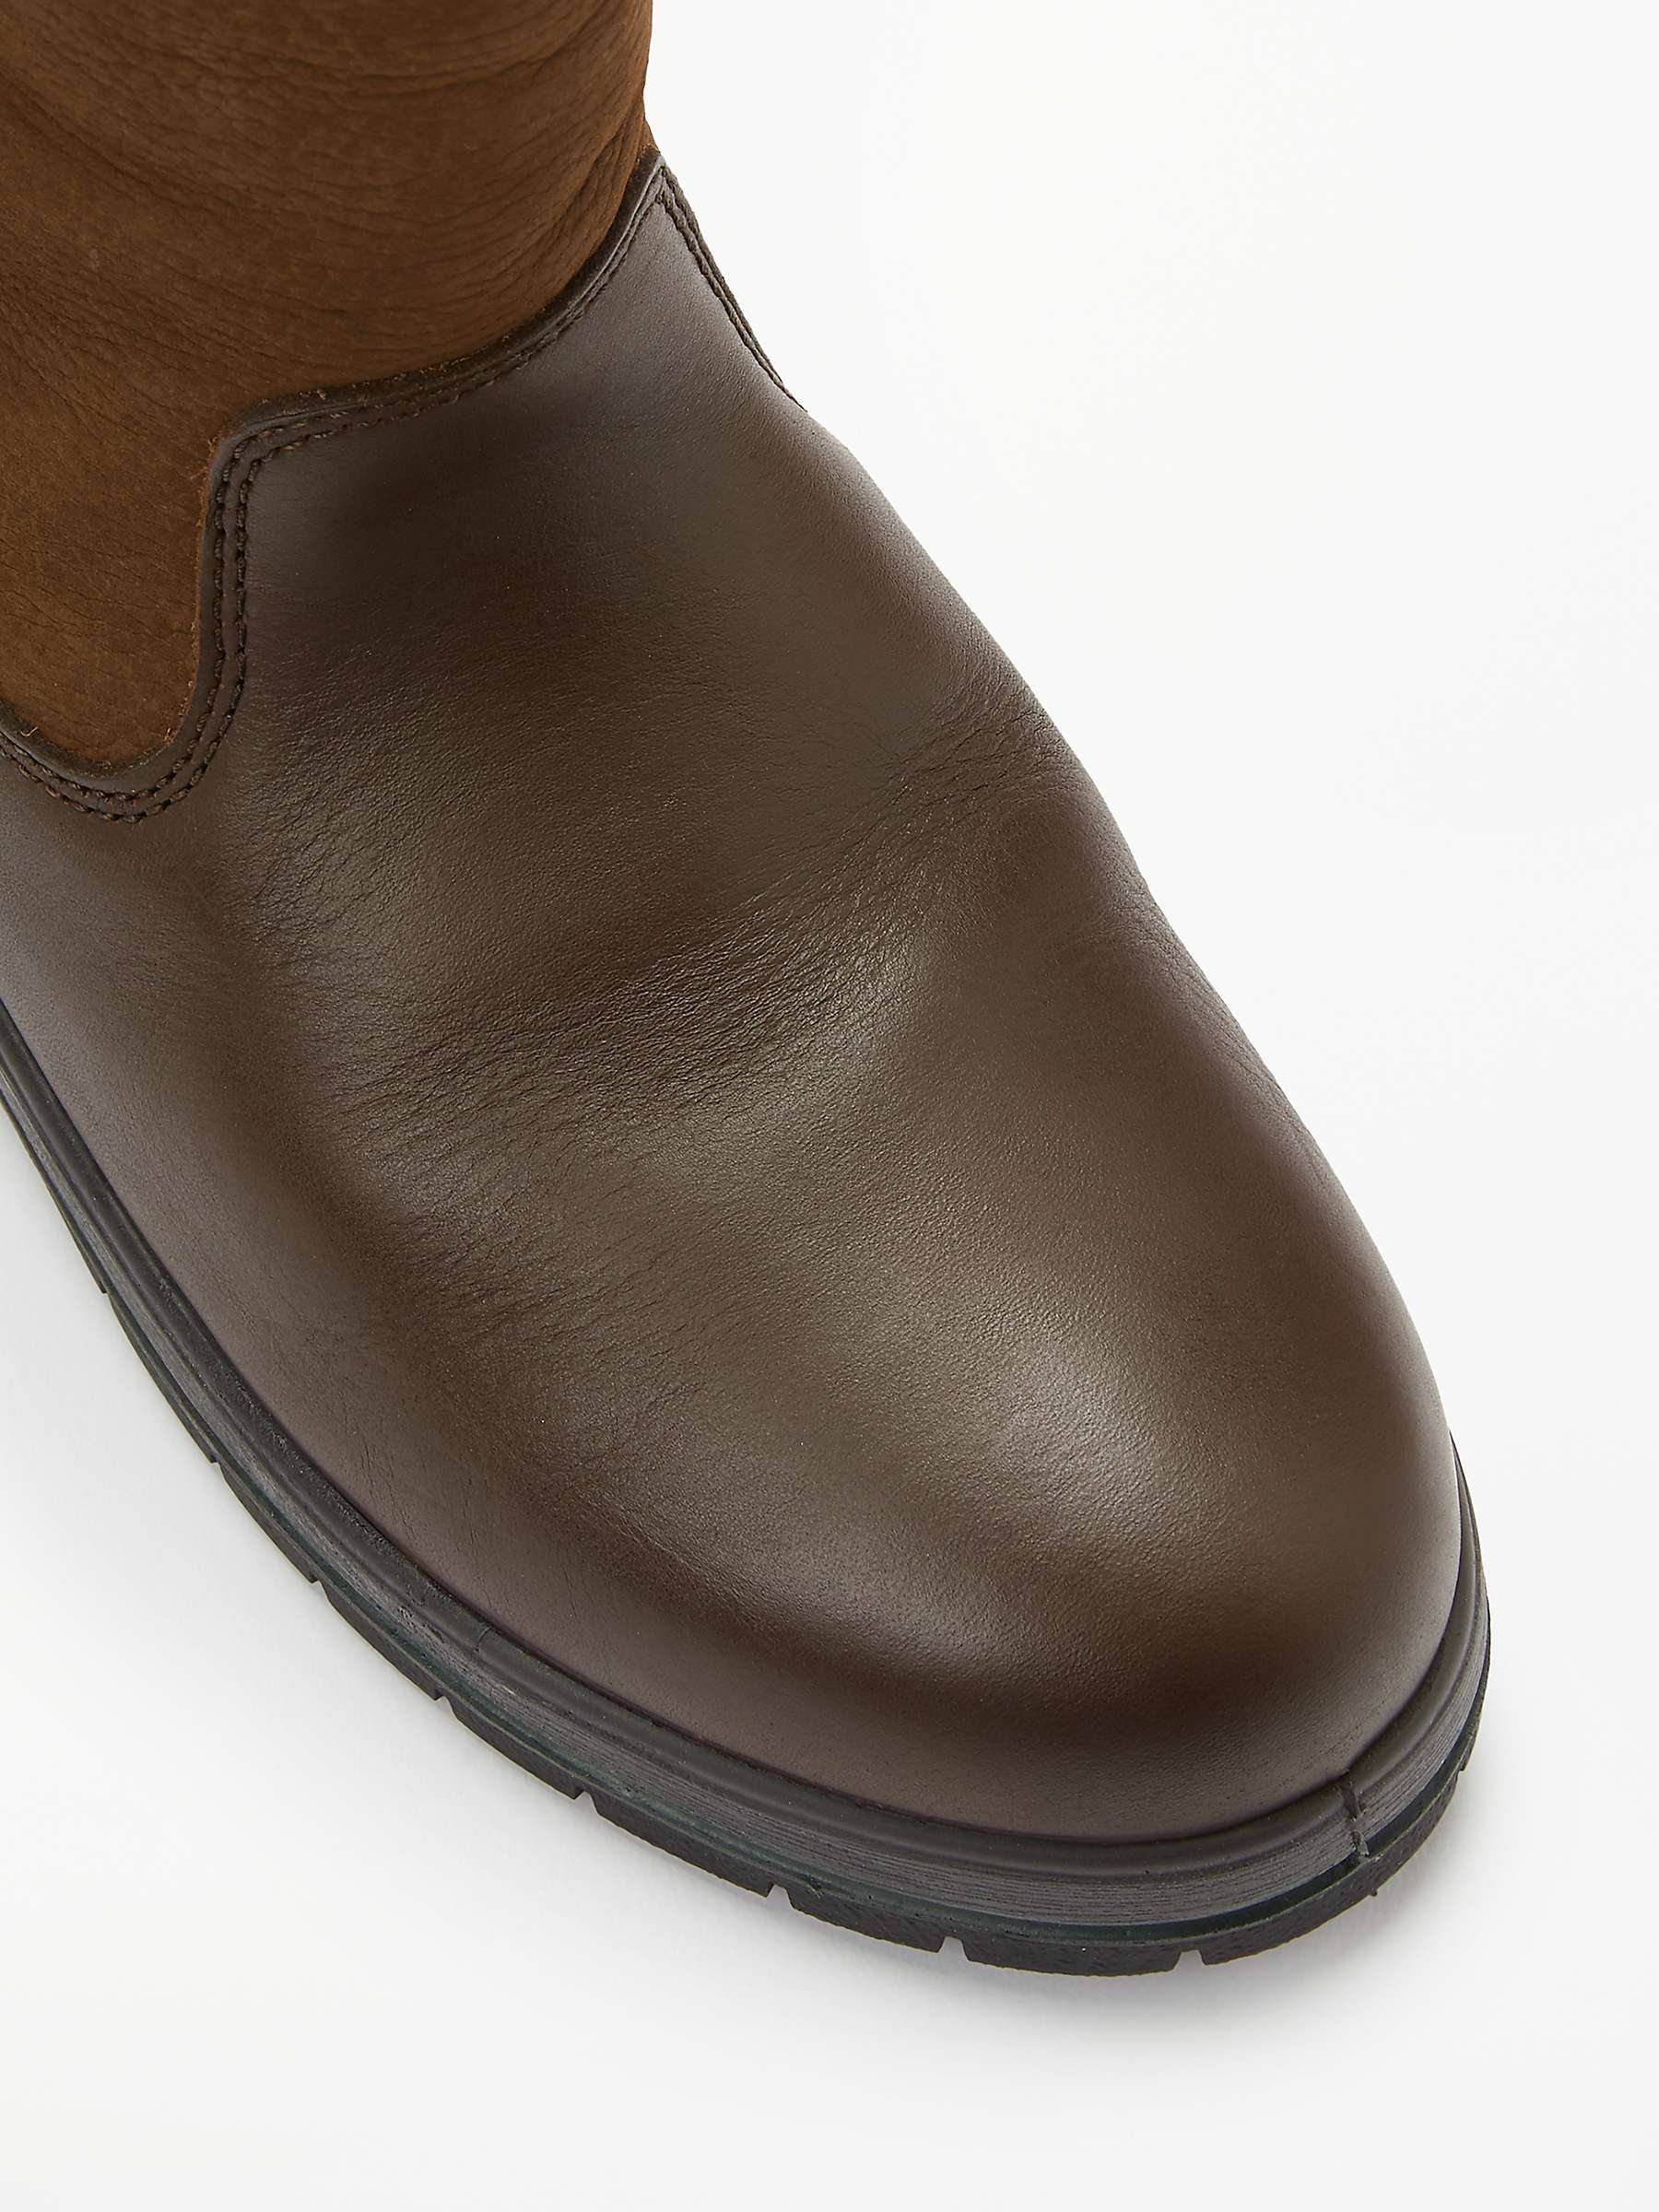 Buy Dubarry Galway Gortex Wide Calf Waterproof Knee High Boots, Walnut Leather Online at johnlewis.com